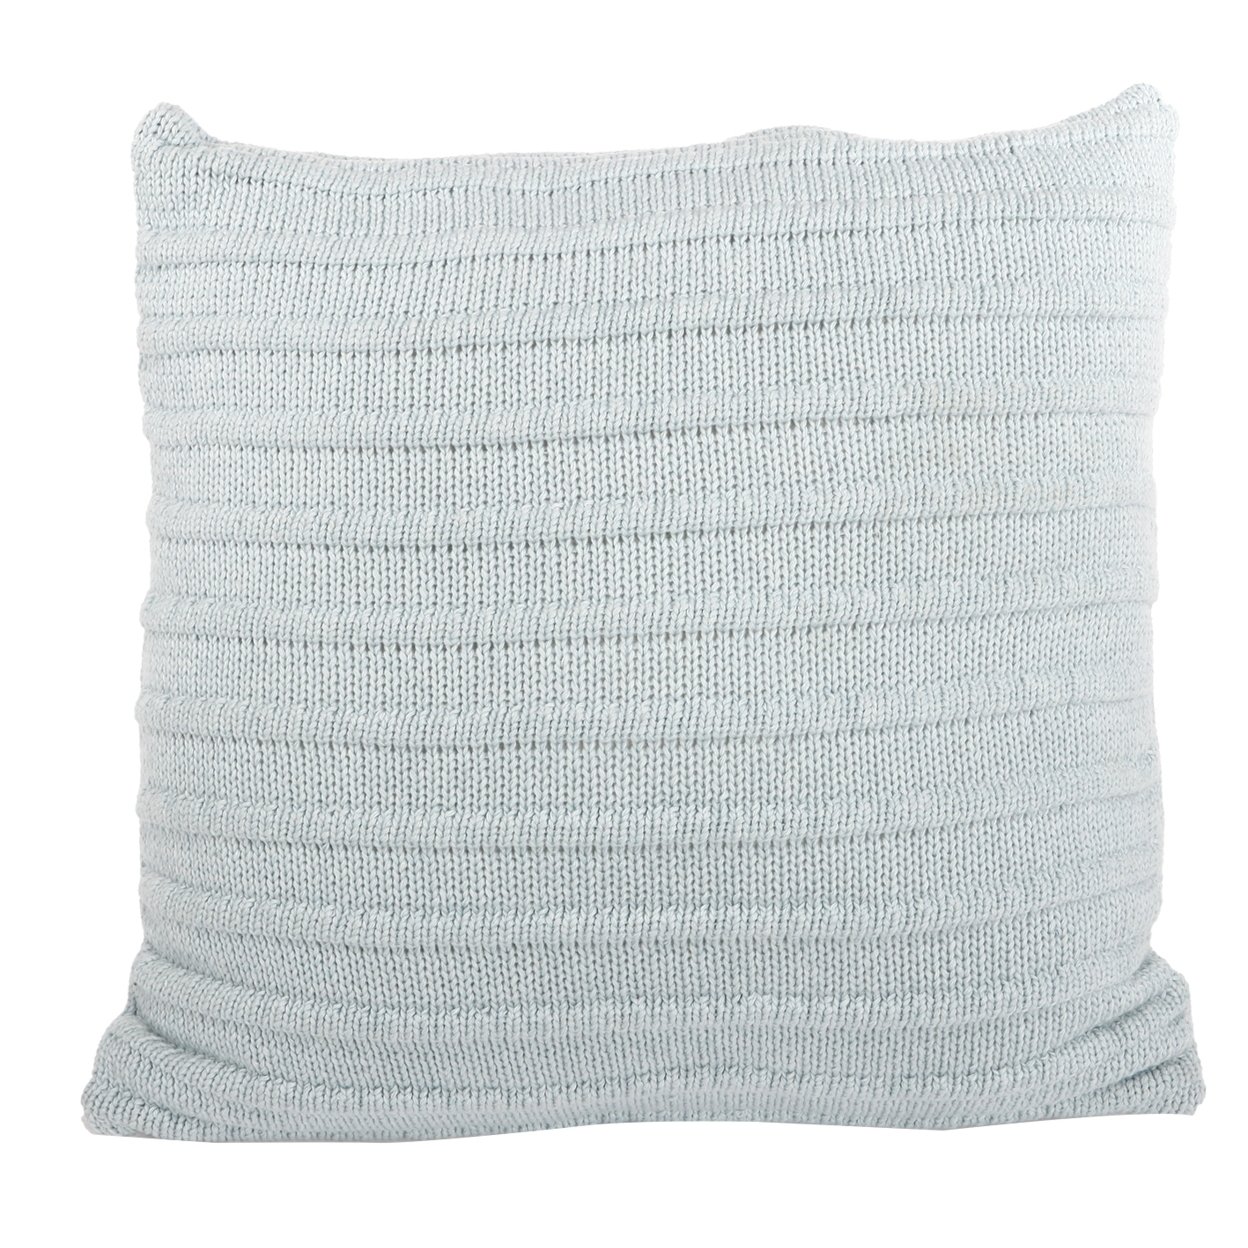 18 X 18 Inch Contemporary Style Polyester Woven Pillow, Set Of 2, Blue- Saltoro Sherpi